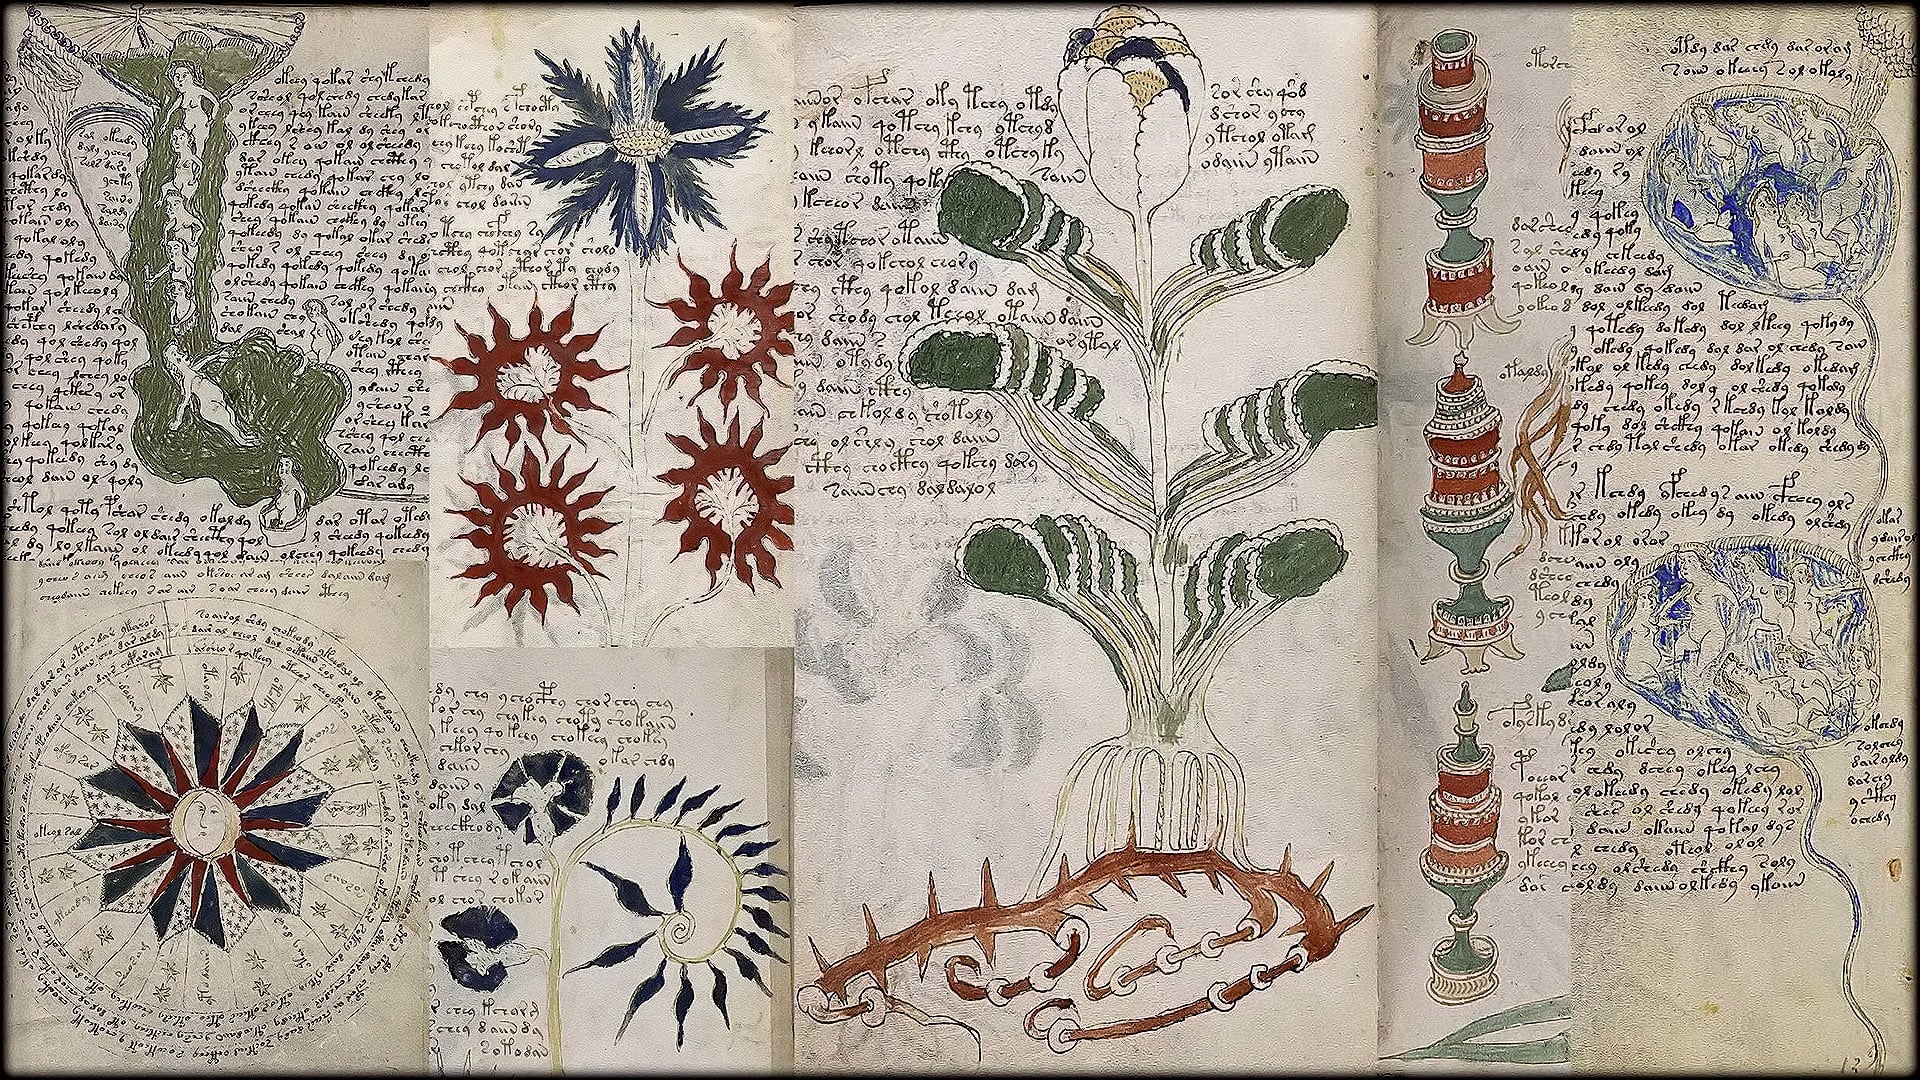 voynich manuscript history channel